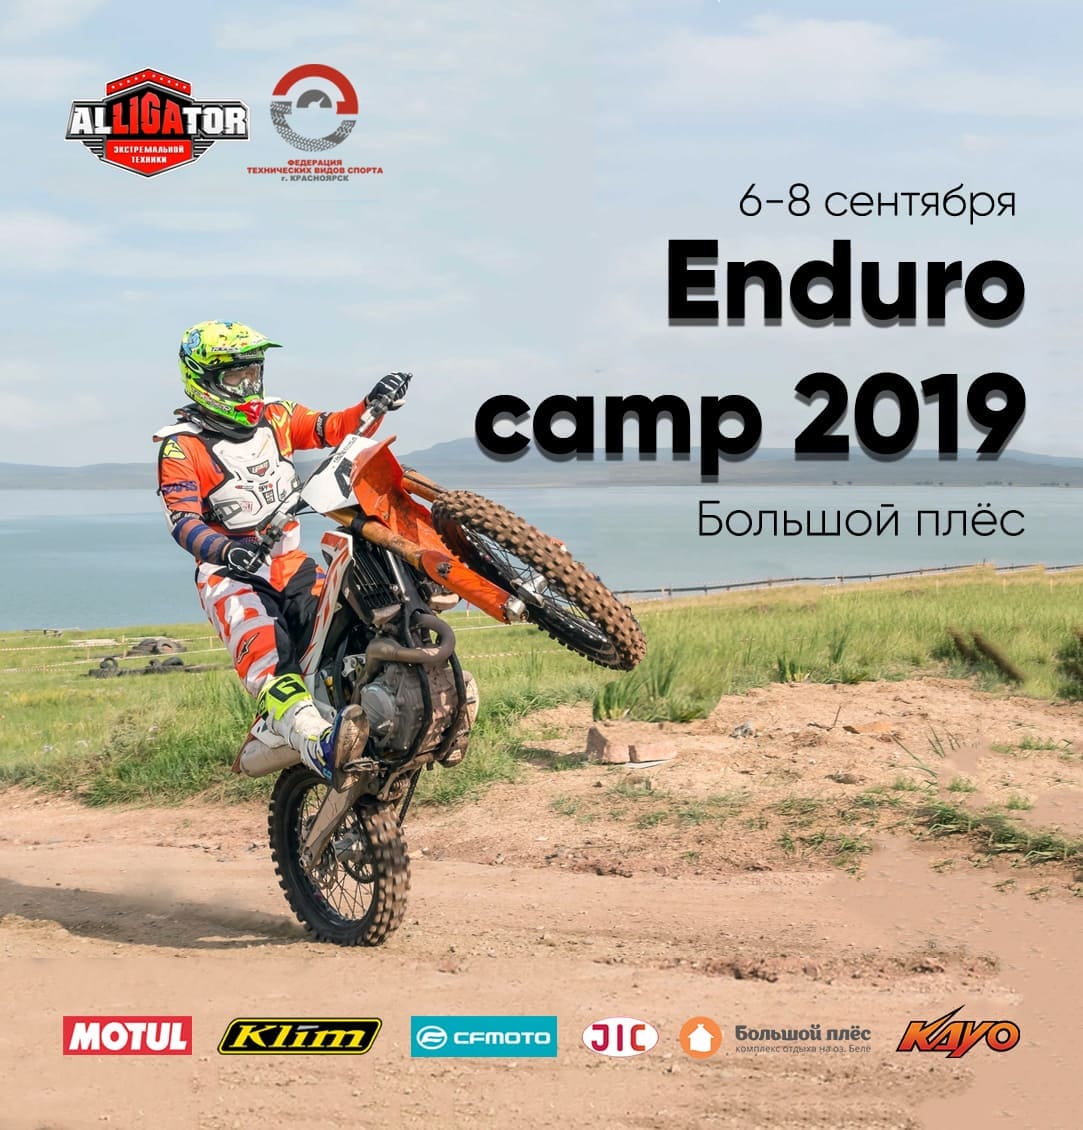 Enduro camp 2019